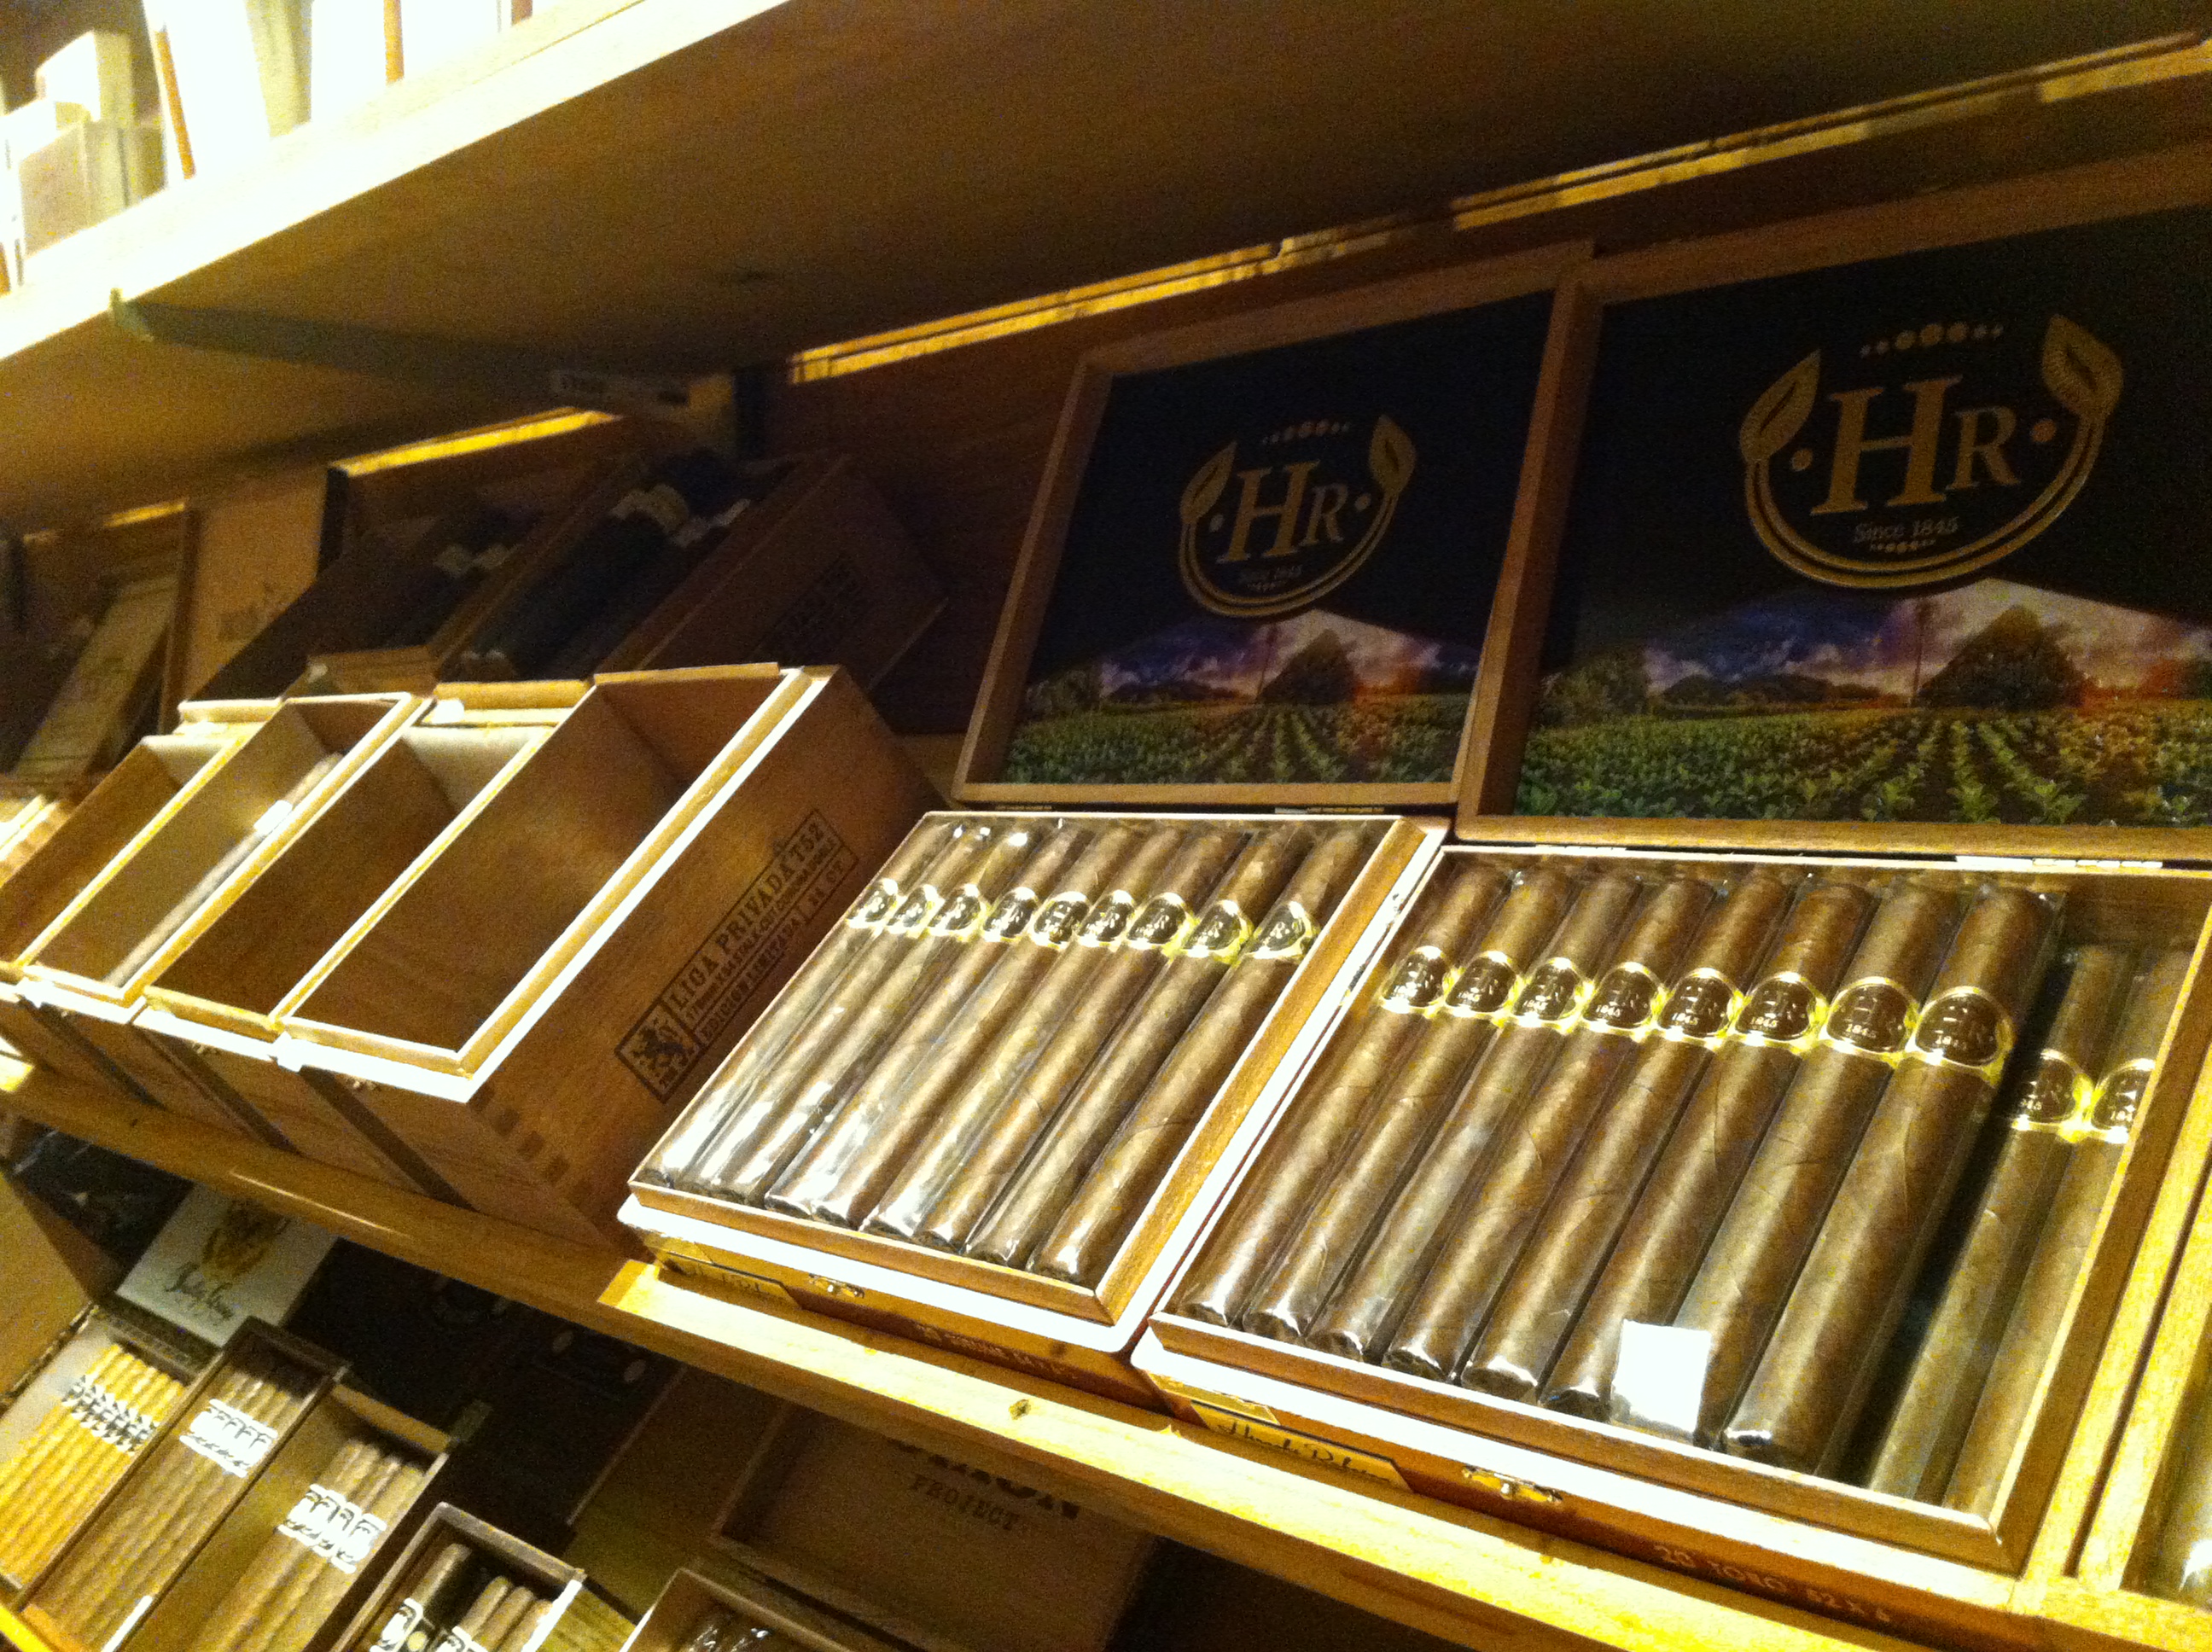 HR (Hirochi Robaina) by Cubanacan Cigars Review